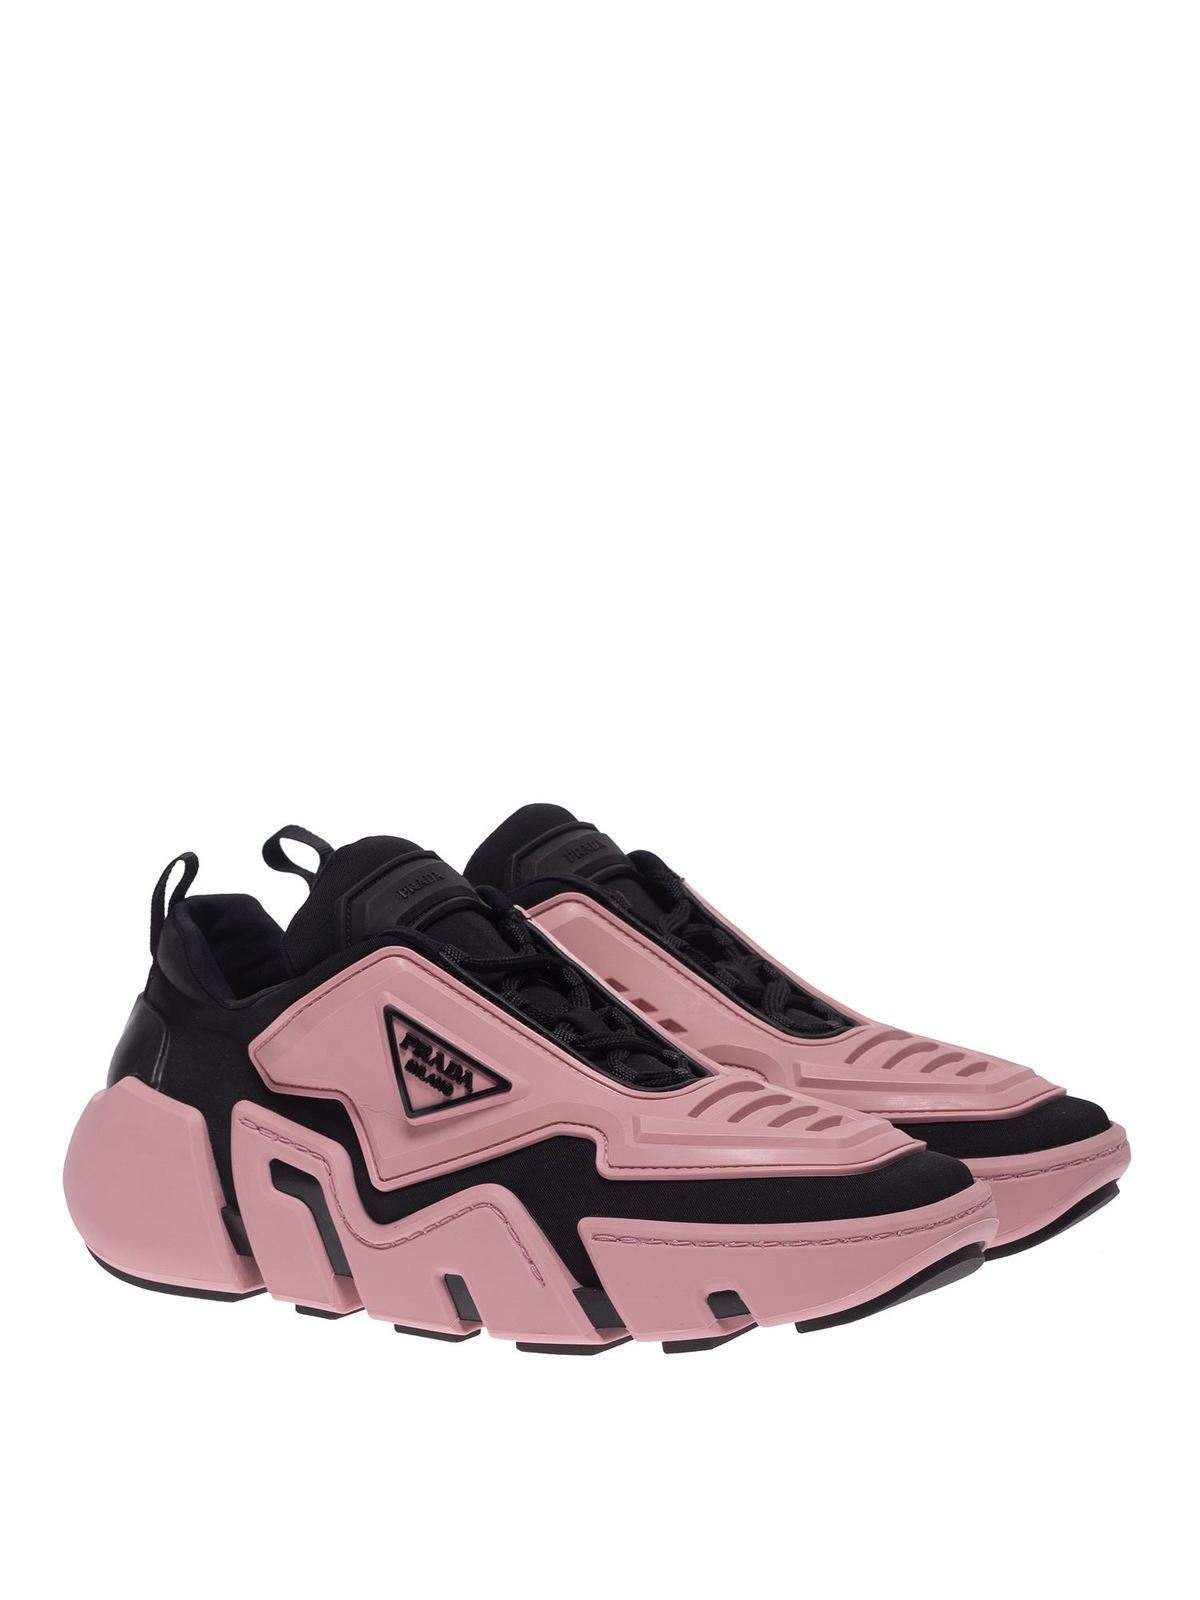 pink prada trainers